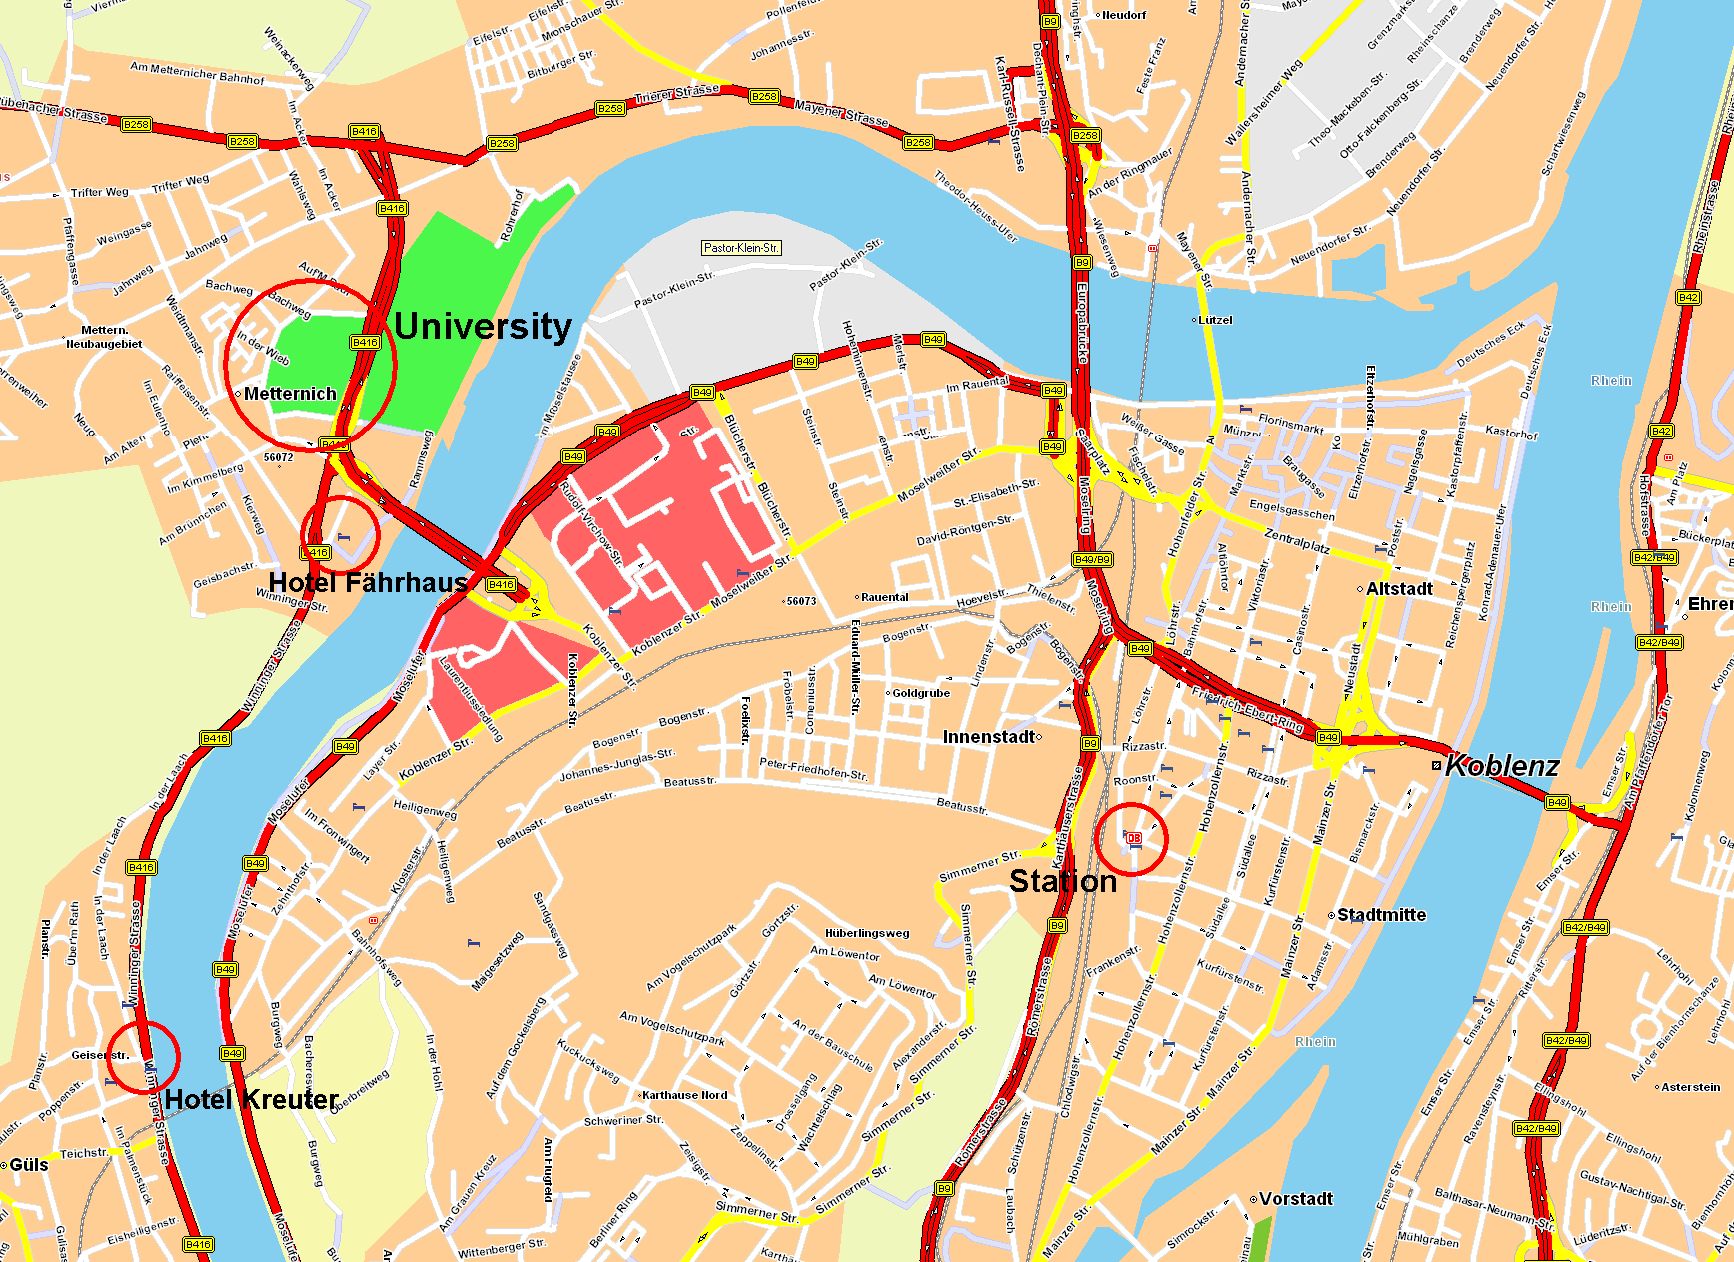 Koblenz centre plan